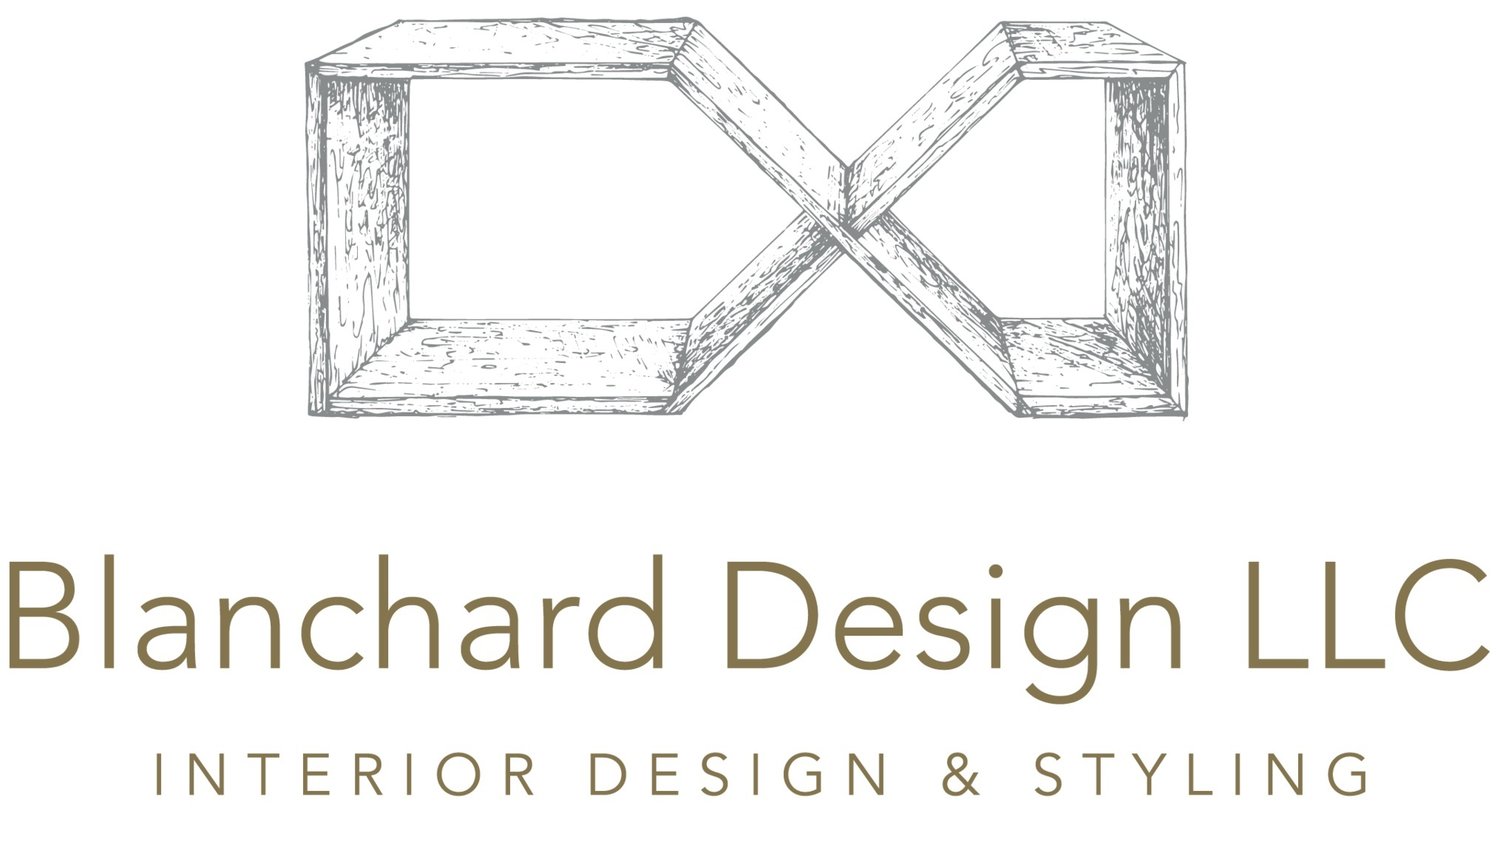 Blanchard Design LLC